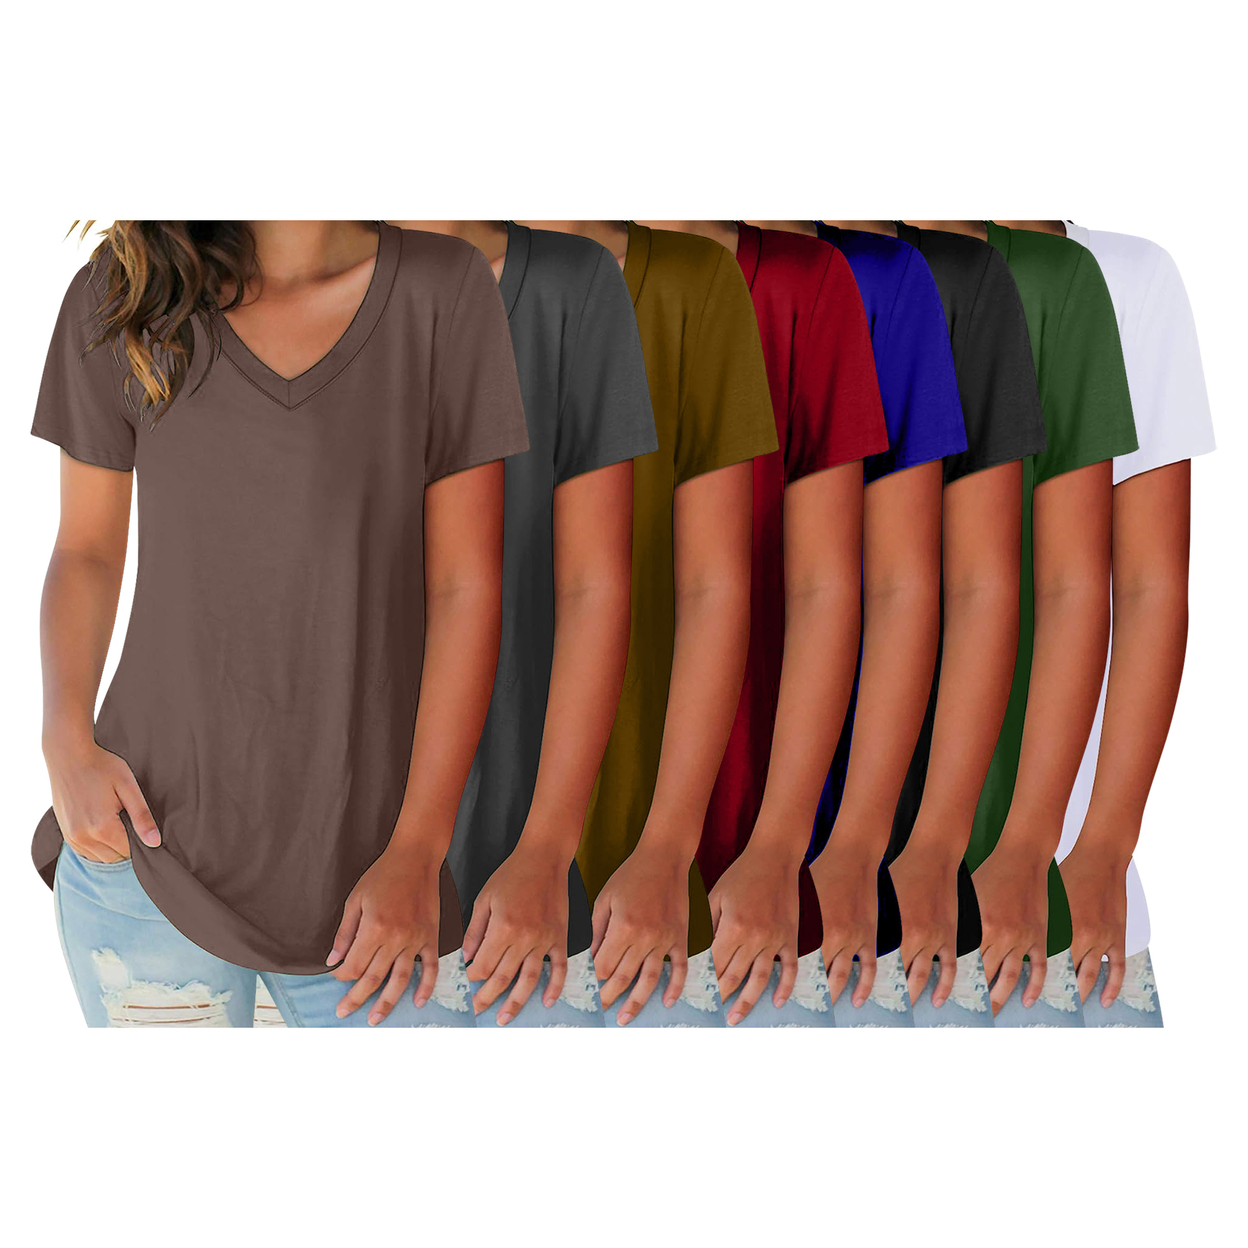 2-Pack: Women's Ultra Soft Smooth Cotton Blend Basic V-Neck Short Sleeve Shirts - Navy & Green, Medium